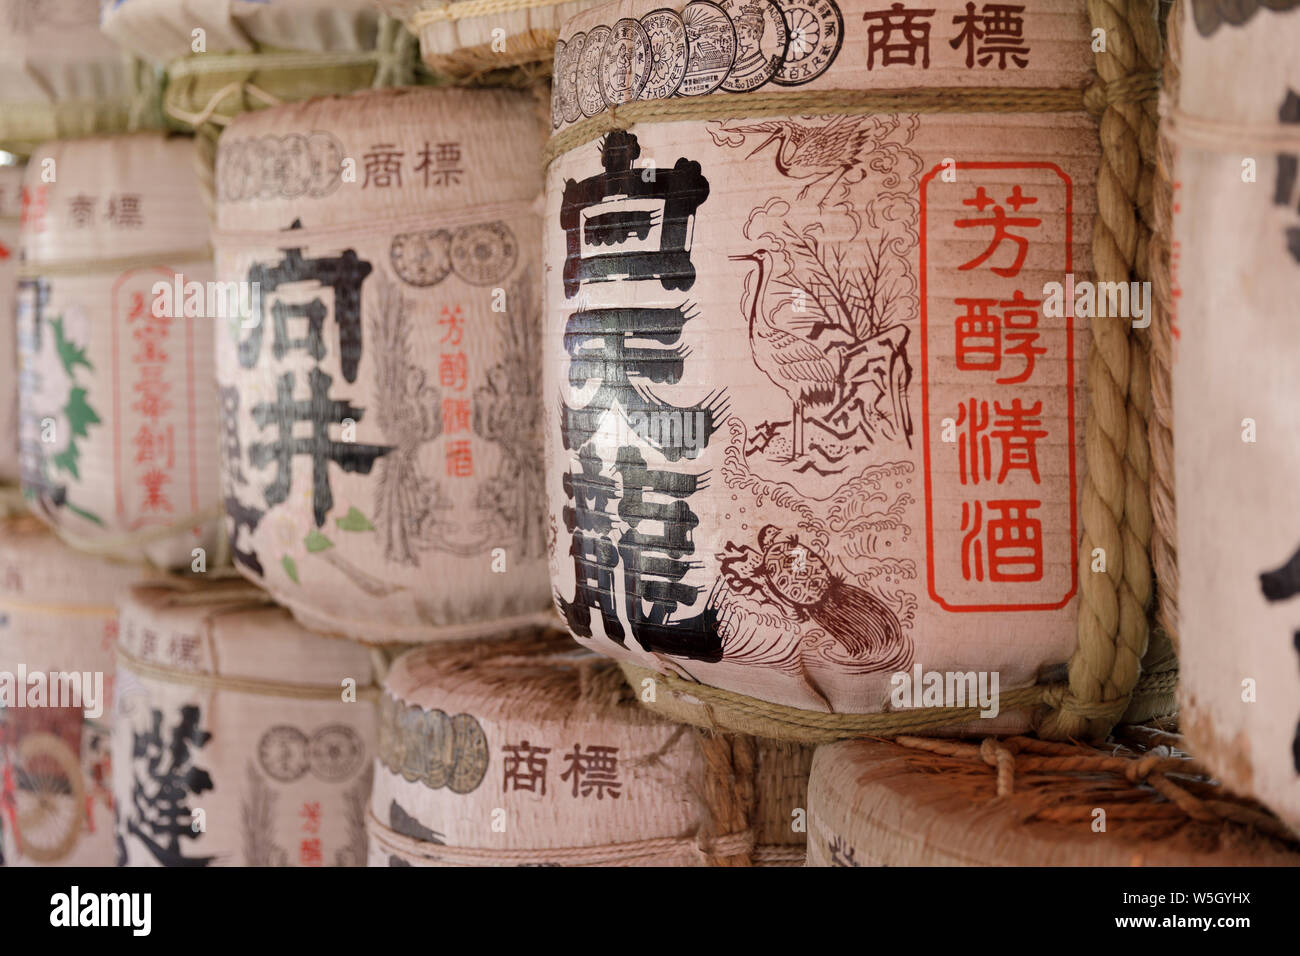 Sake barrels, Itsukushima Shrine, Miyajima, Hiroshima Prefecture, Japan, Asia Stock Photo